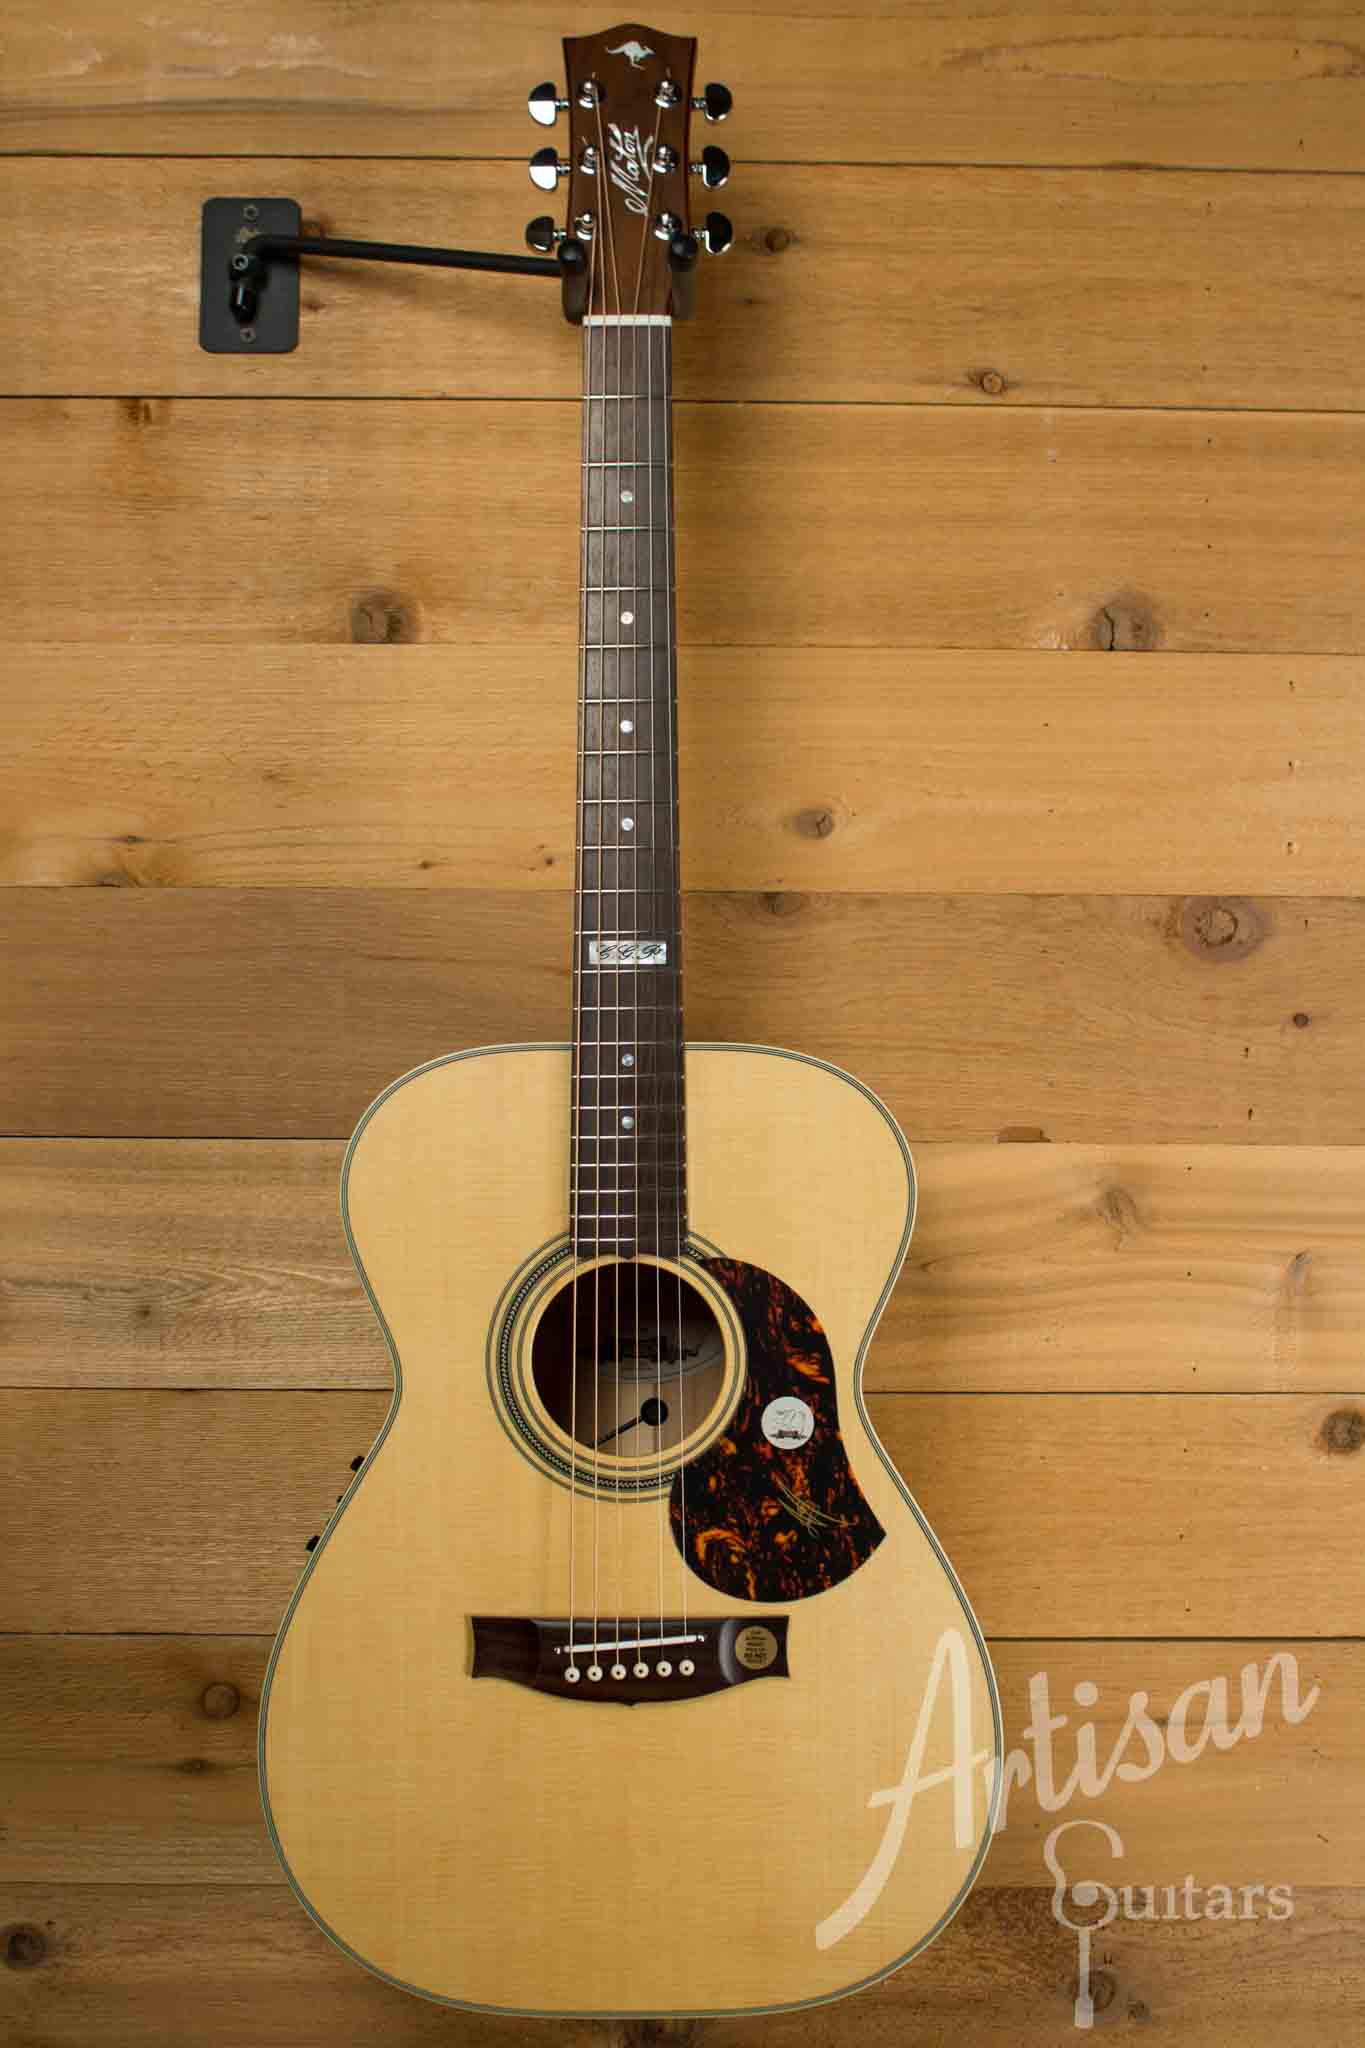 Maton EBG 808 TE Tommy Emmanuel Signature Guitar ID-10528 - Artisan Guitars